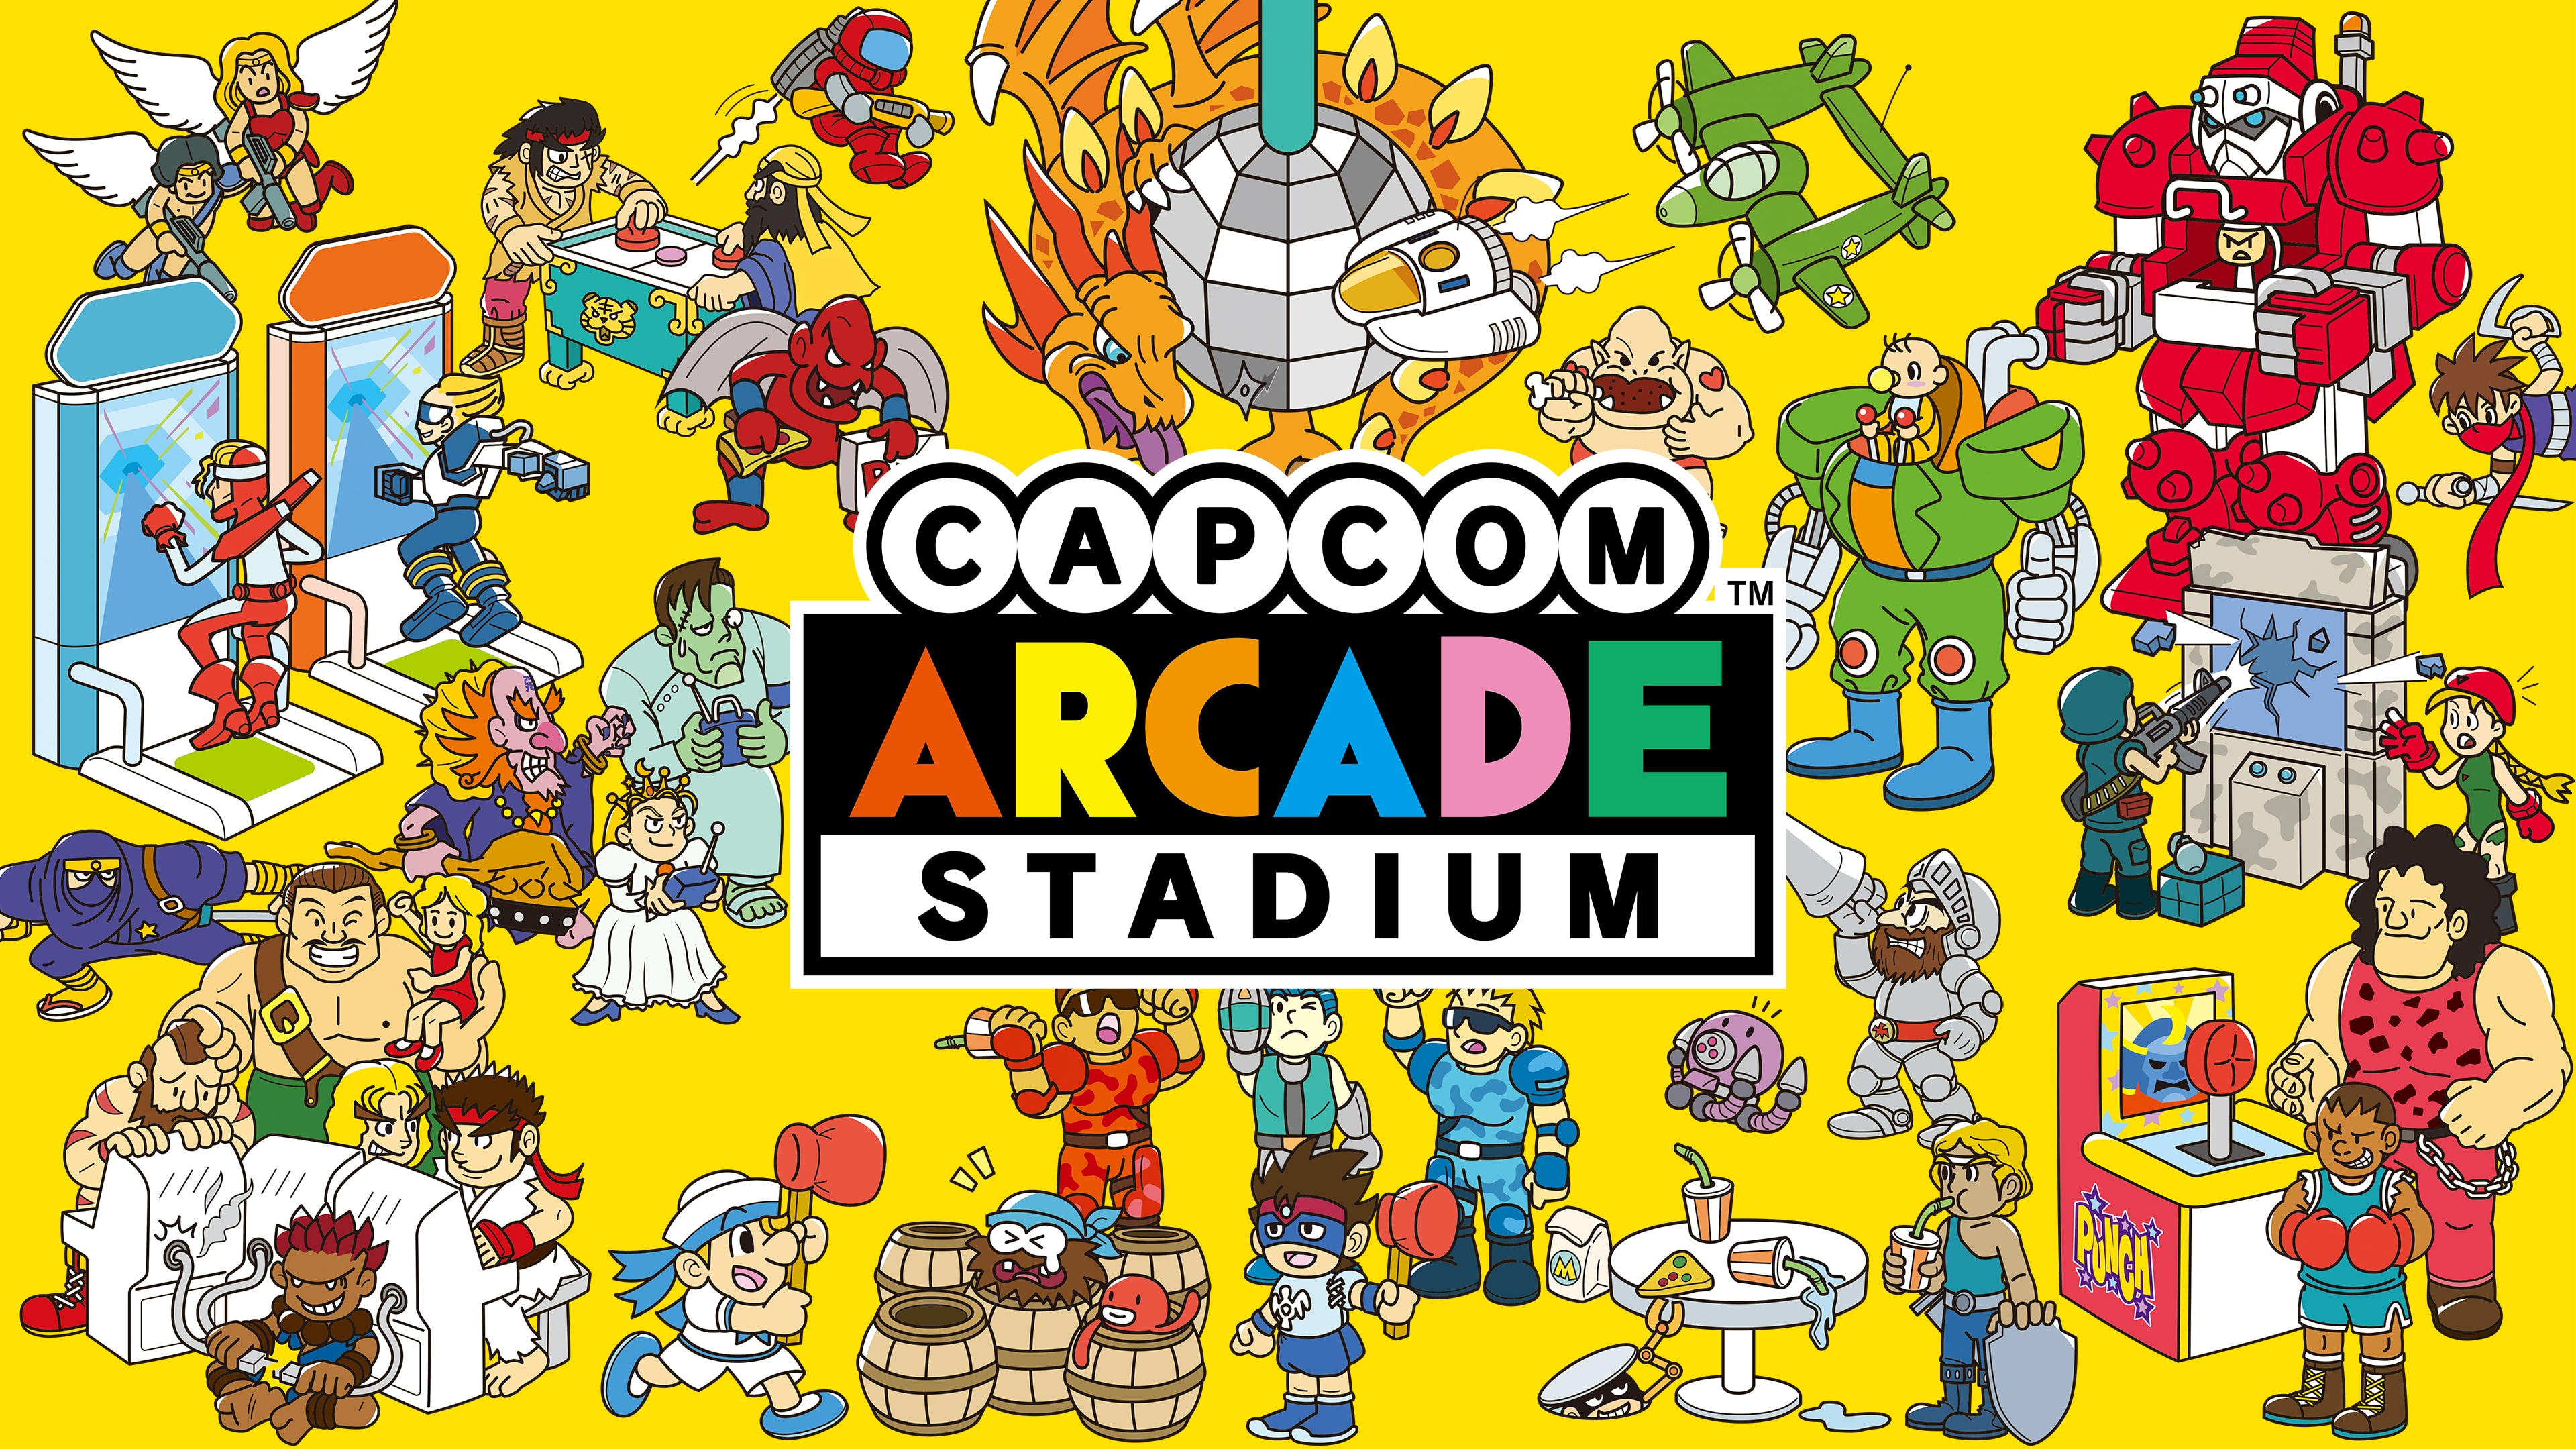 Capcom Arcade Stadium (Simplified Chinese, English, Korean, Thai, Japanese, Traditional Chinese)